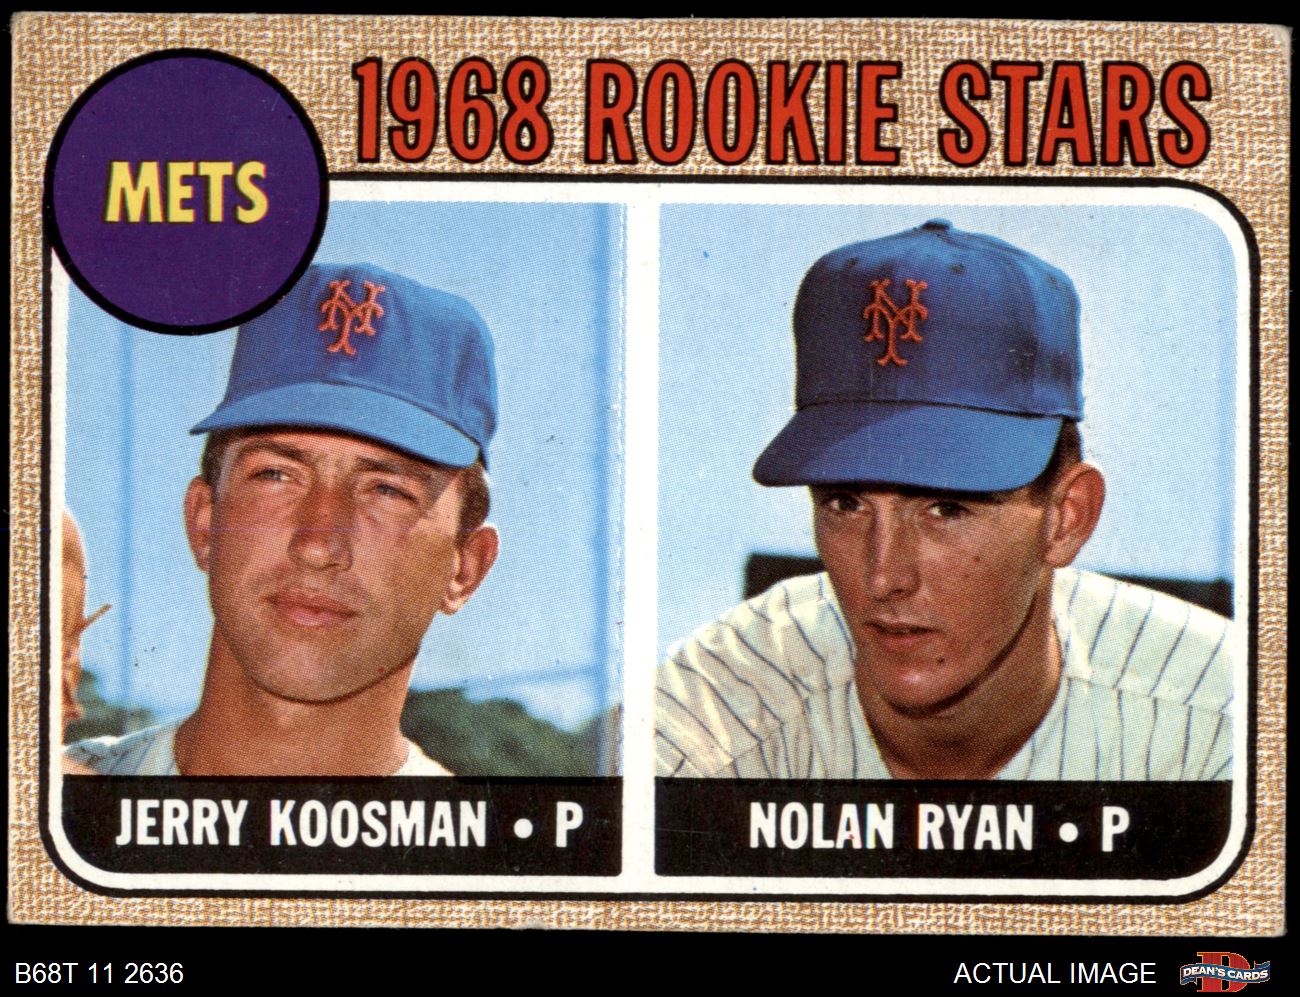  1968 Topps Baseball Card #177 Nolan Ryan/Jerry Koosman Rookie  G/VG - Baseball Slabbed Rookie Cards : Collectibles & Fine Art